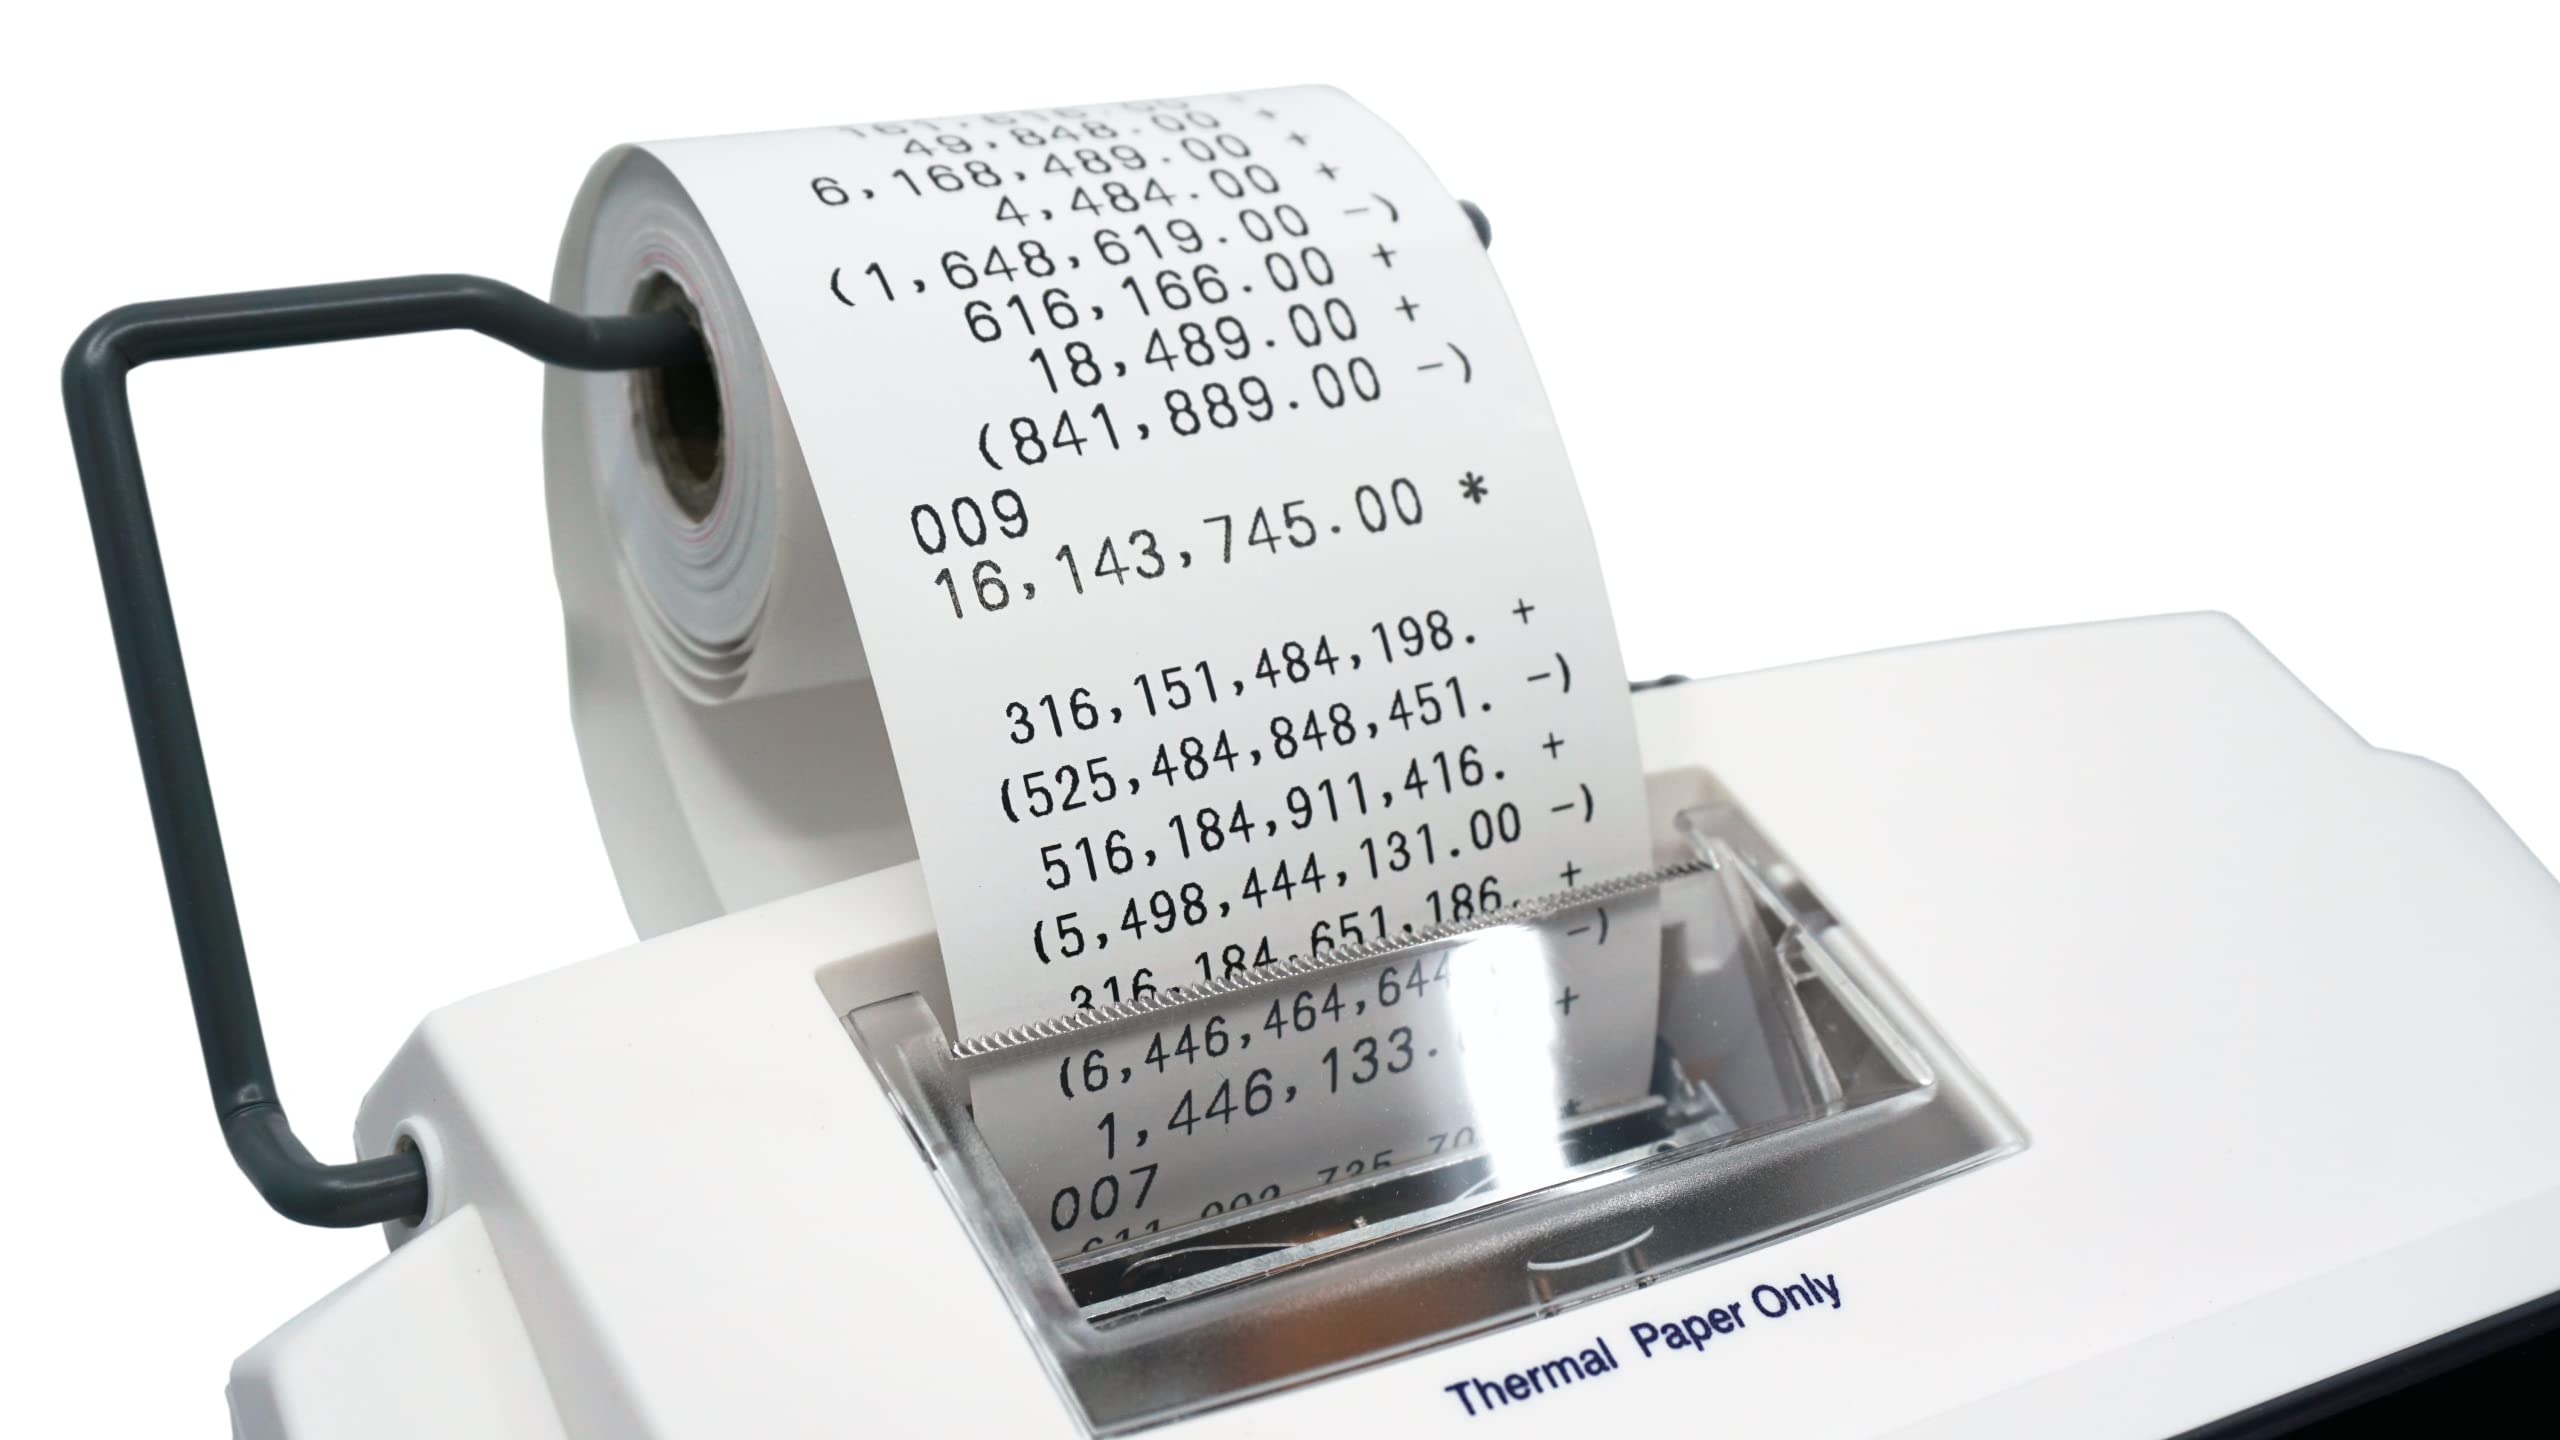 Victor 1226 Thermal Printing Calculator, 12-Digit Display, 8.0 LPS Printing Speed, Off-White